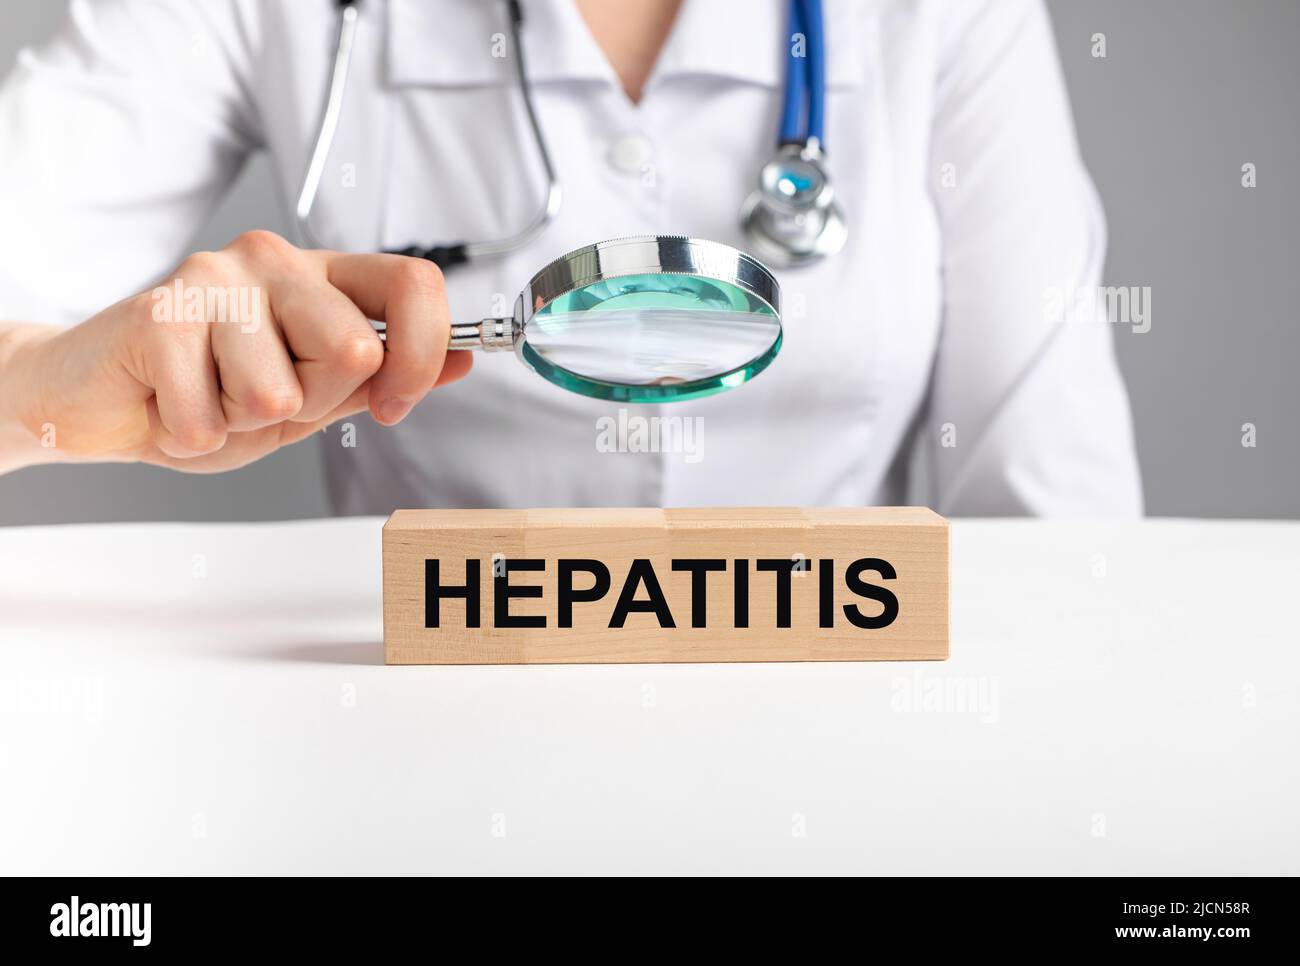 hepatitis word, liver disease concept. High quality photo Stock Photo